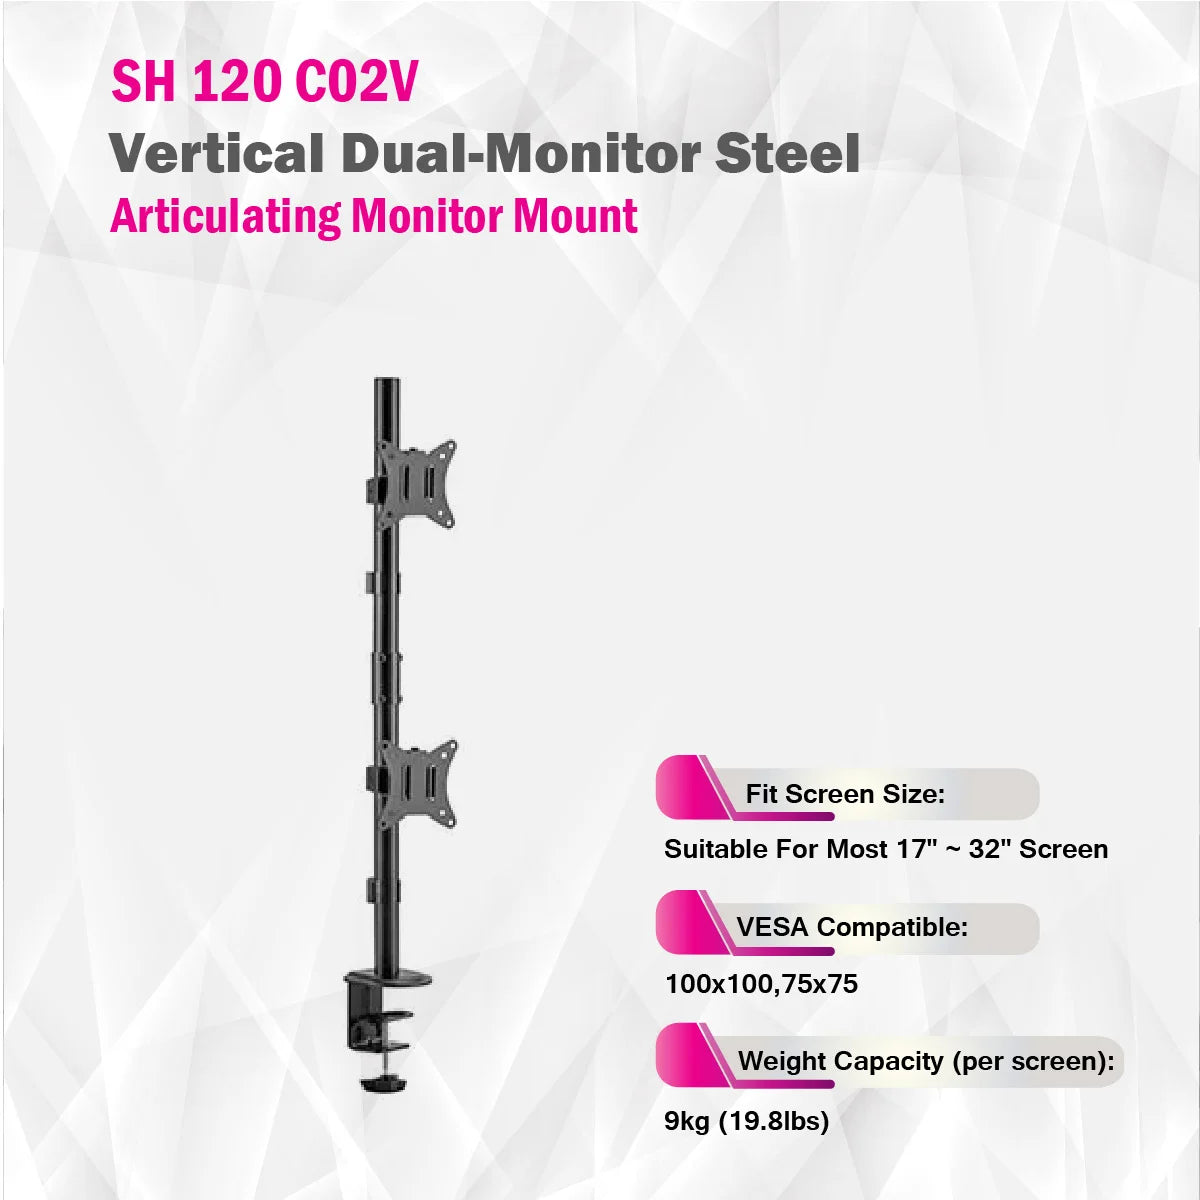 SkillTech -SH120 C02V - Vertical Dual-Monitor Steel Articulating Monitor Mount